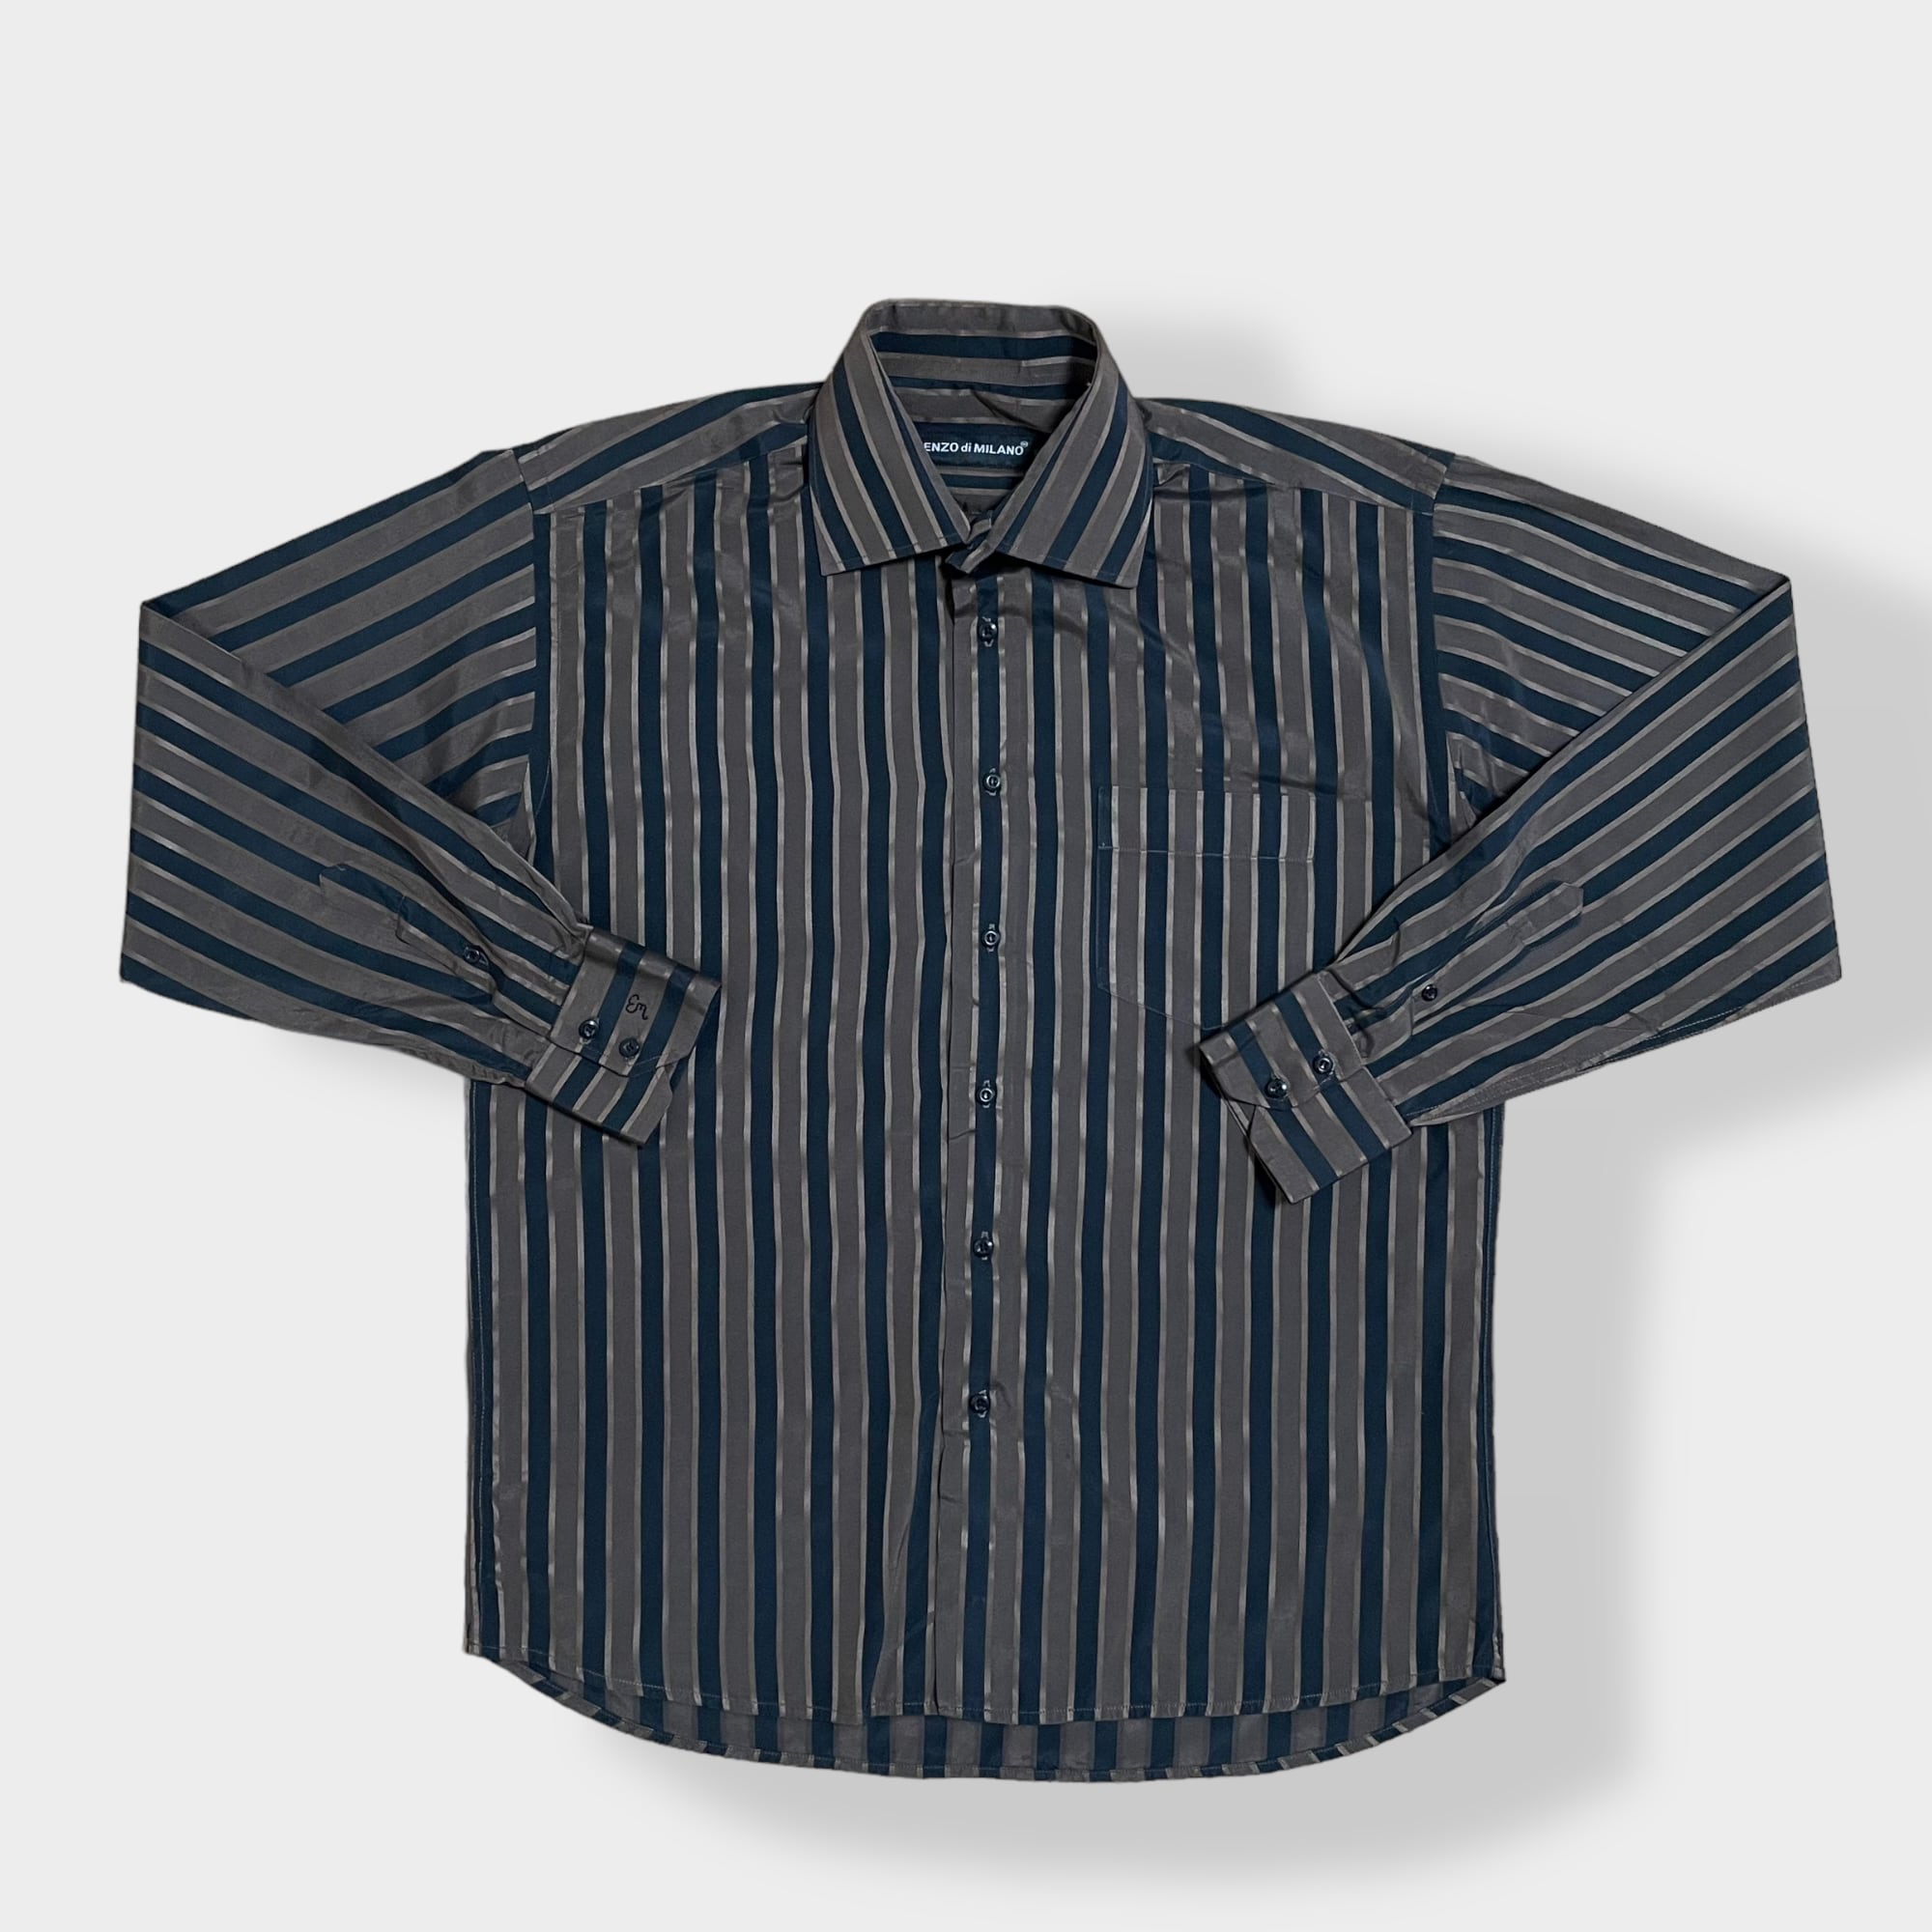 ENZO di MILANO】デカ襟 70s風 刺繍ロゴ ストライプシャツ 長袖シャツ ...